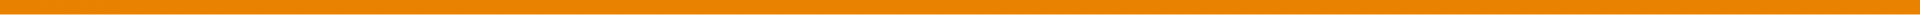 Orange Dividing Line